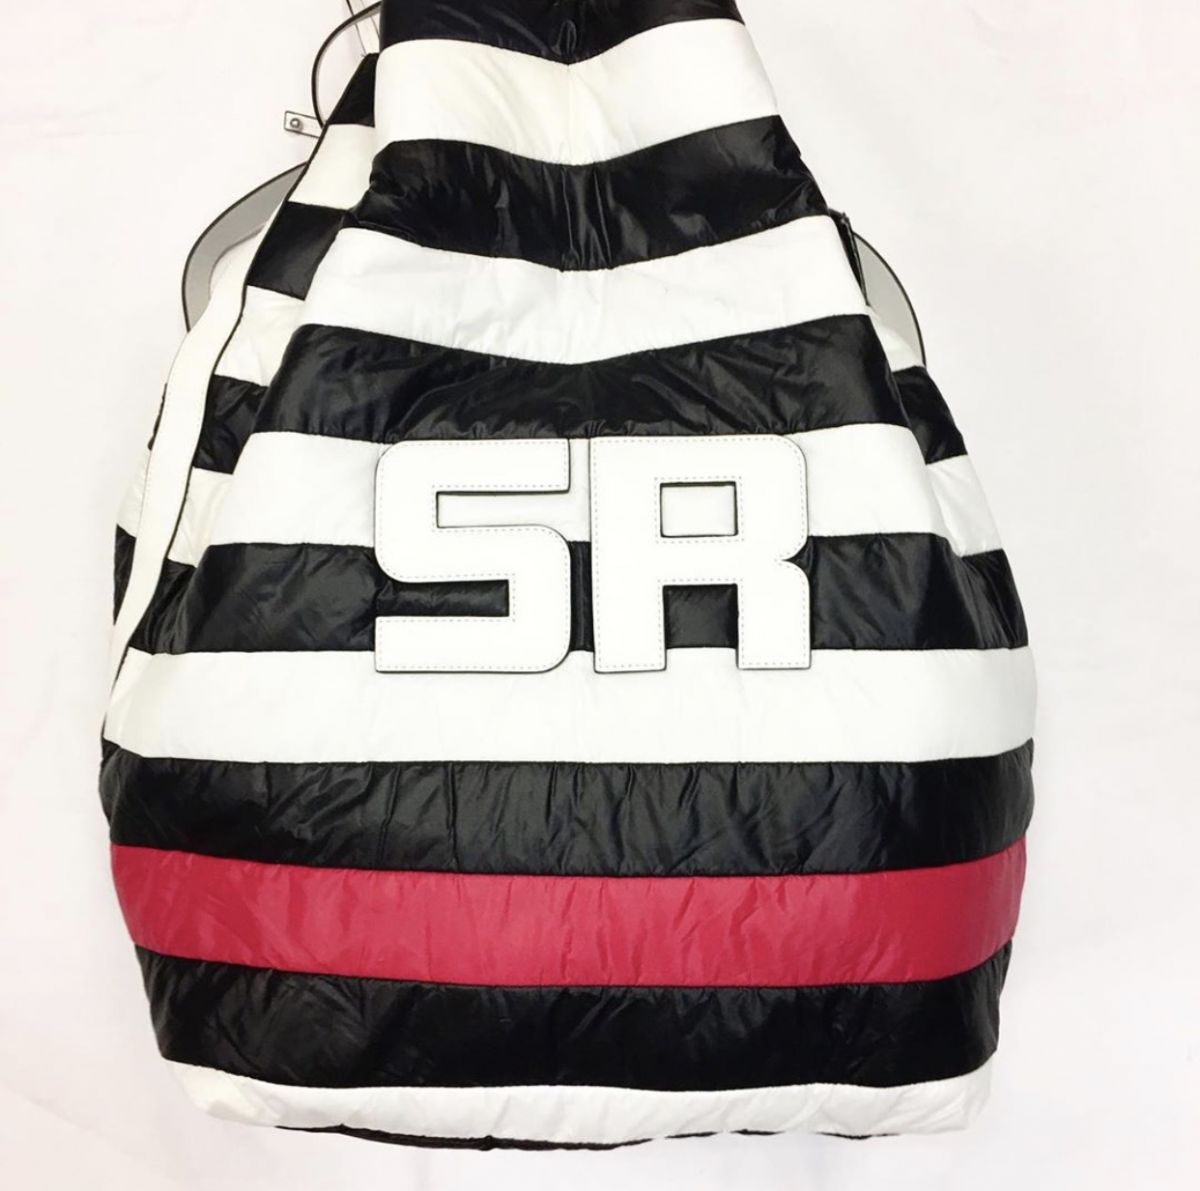 Сумка-рюкзак Sonia Rykiel размер большой цена 30 770 руб